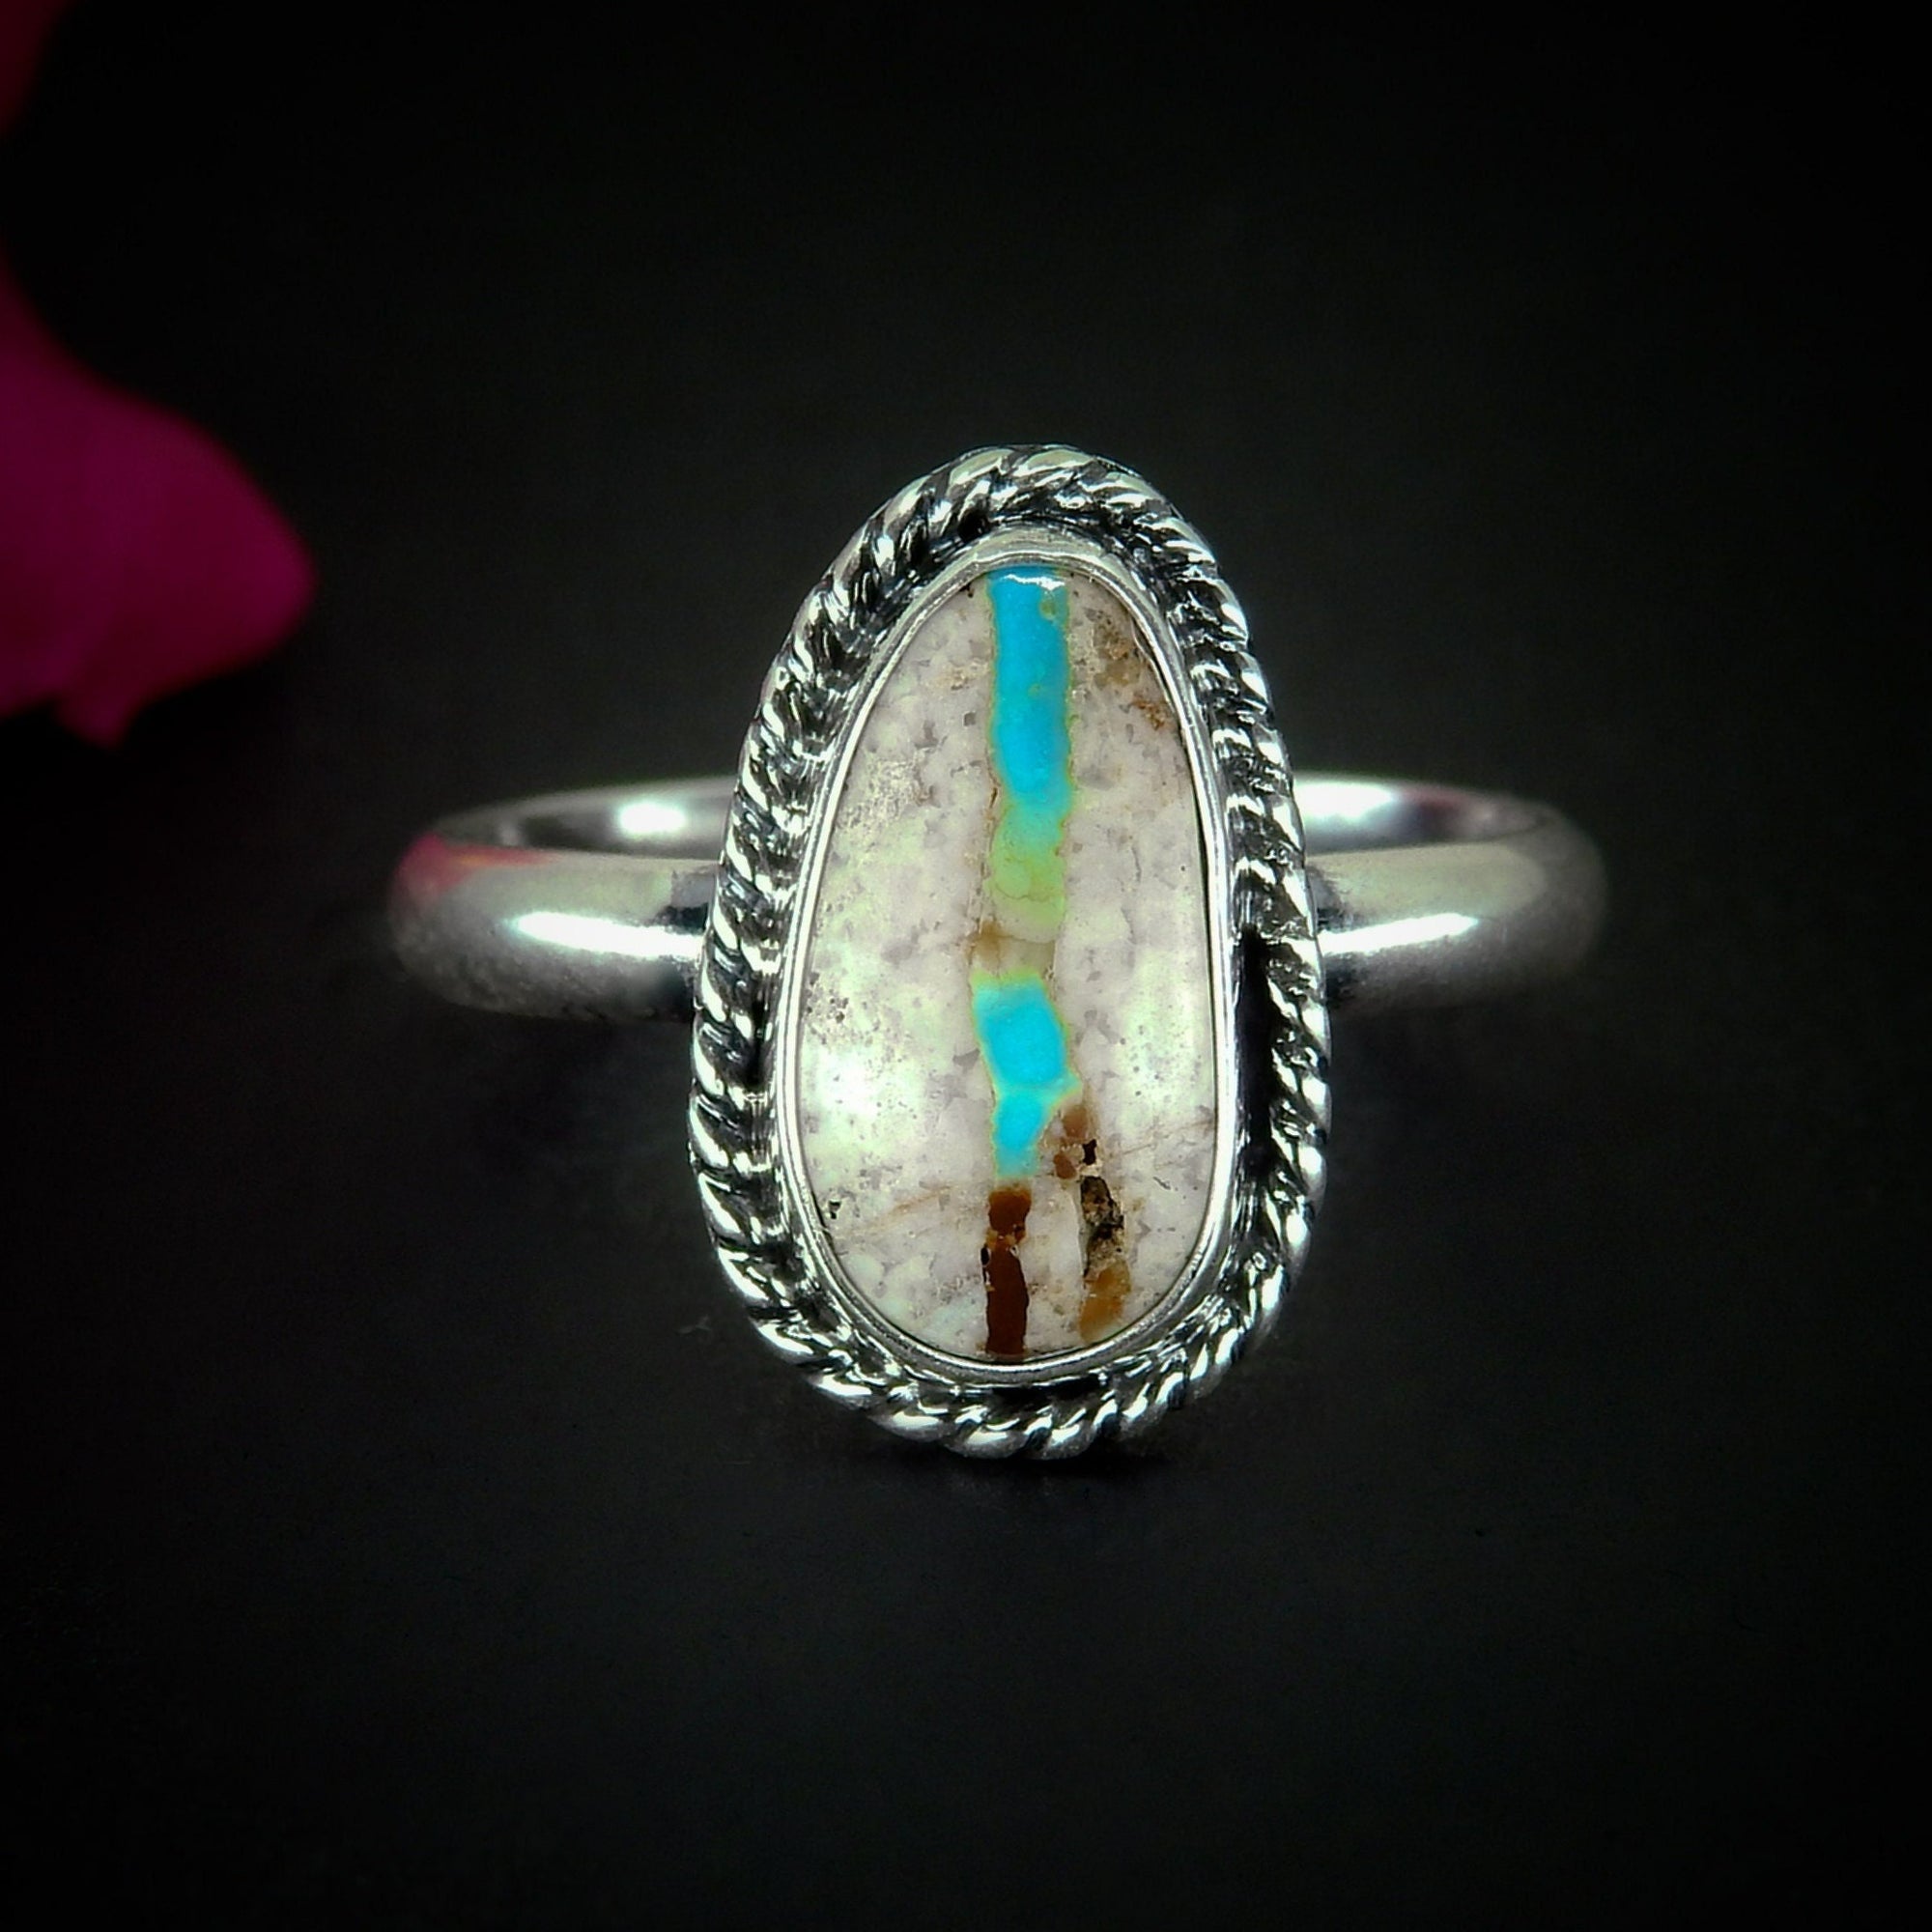 Stone Mountain Ribbon Turquoise Ring - Size 11 1/4 to 11 1/2 - Sterling Silver - Stone Mountain Turquoise Jewelry - Genuine Turquoise Ring